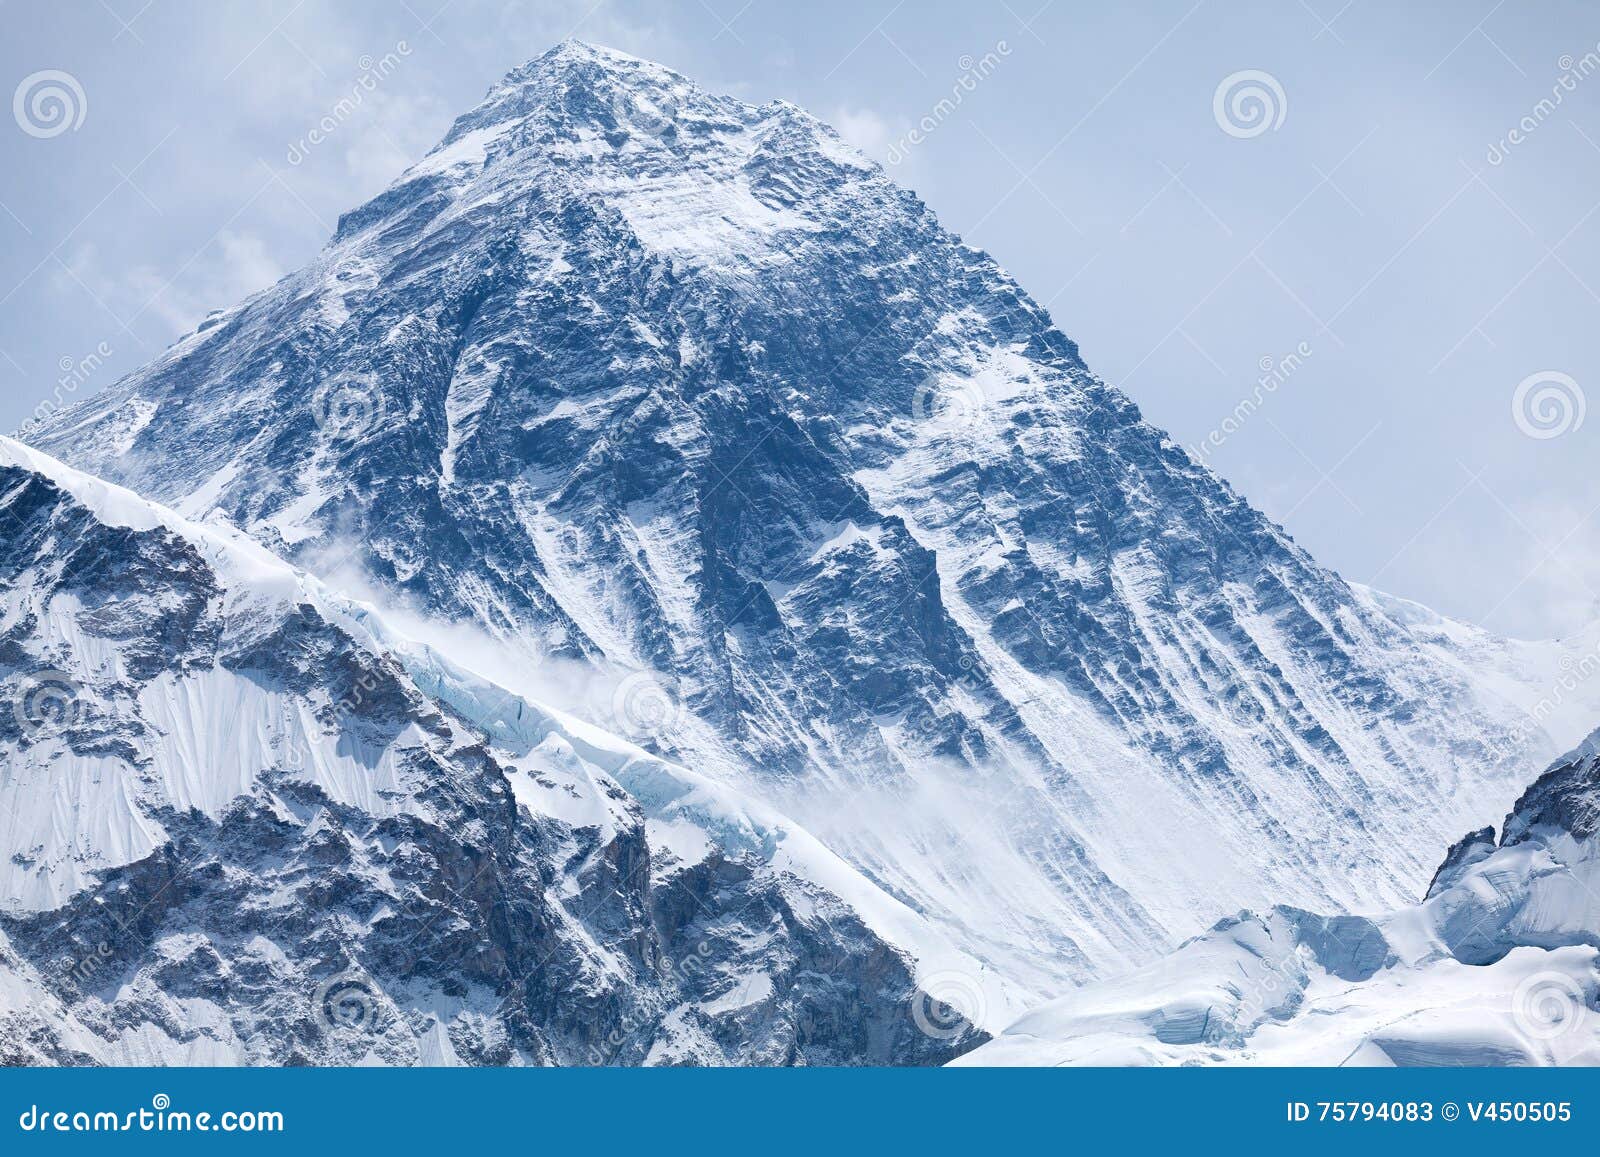 summit of mt. everest from kala patthar, solu khumbu, nepal